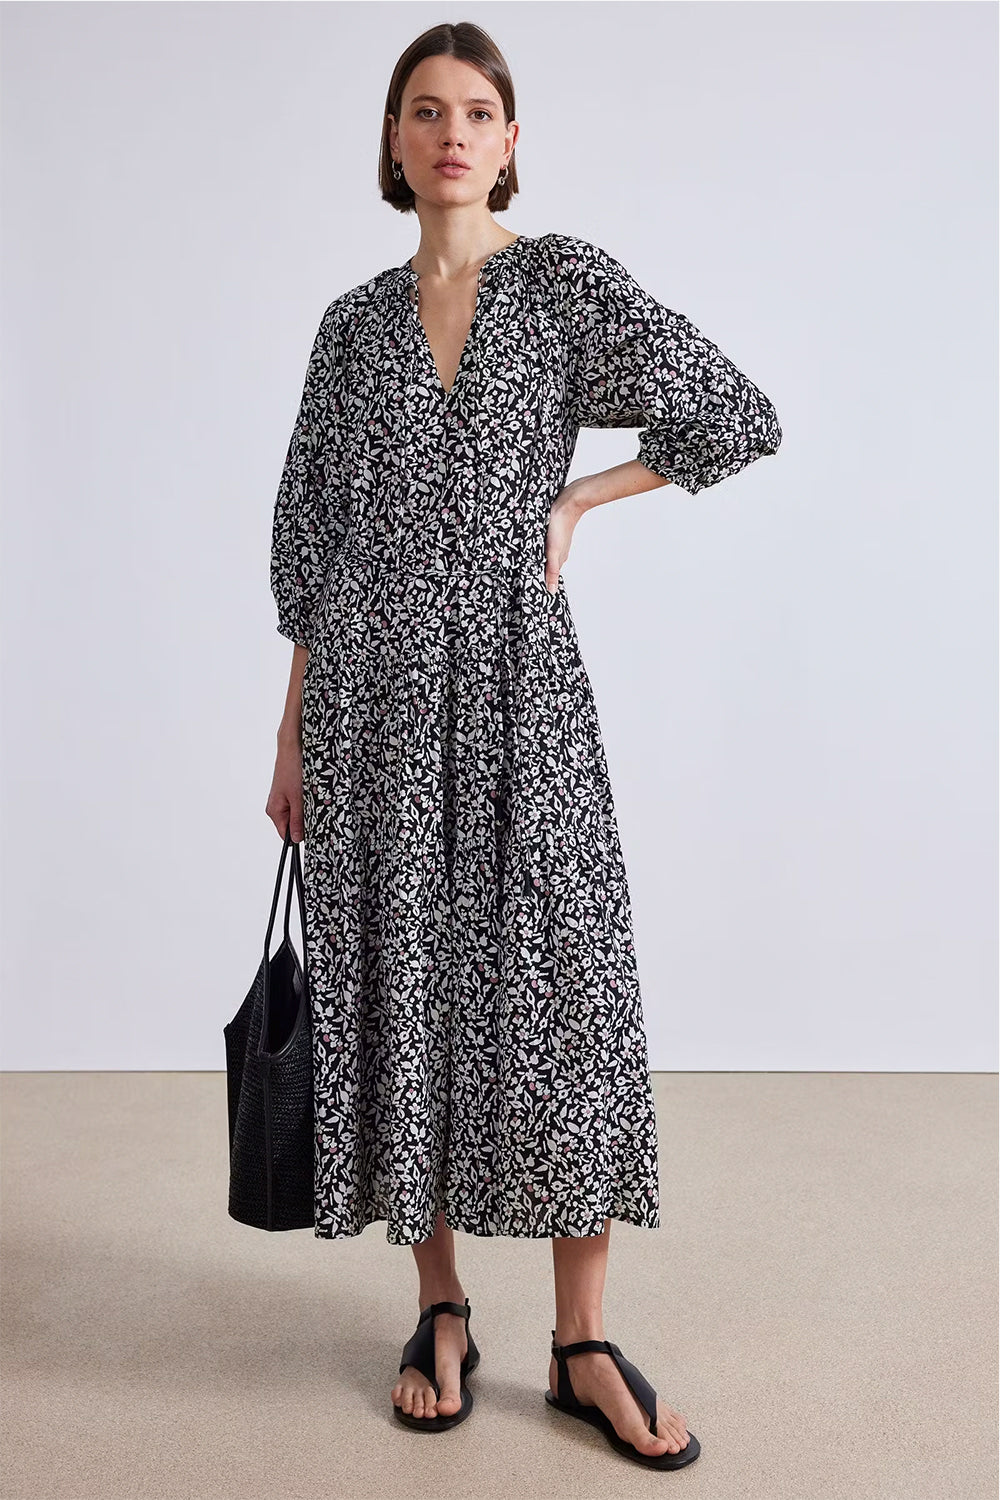 Luminile Dress | Apiece Apart | The Standard Store